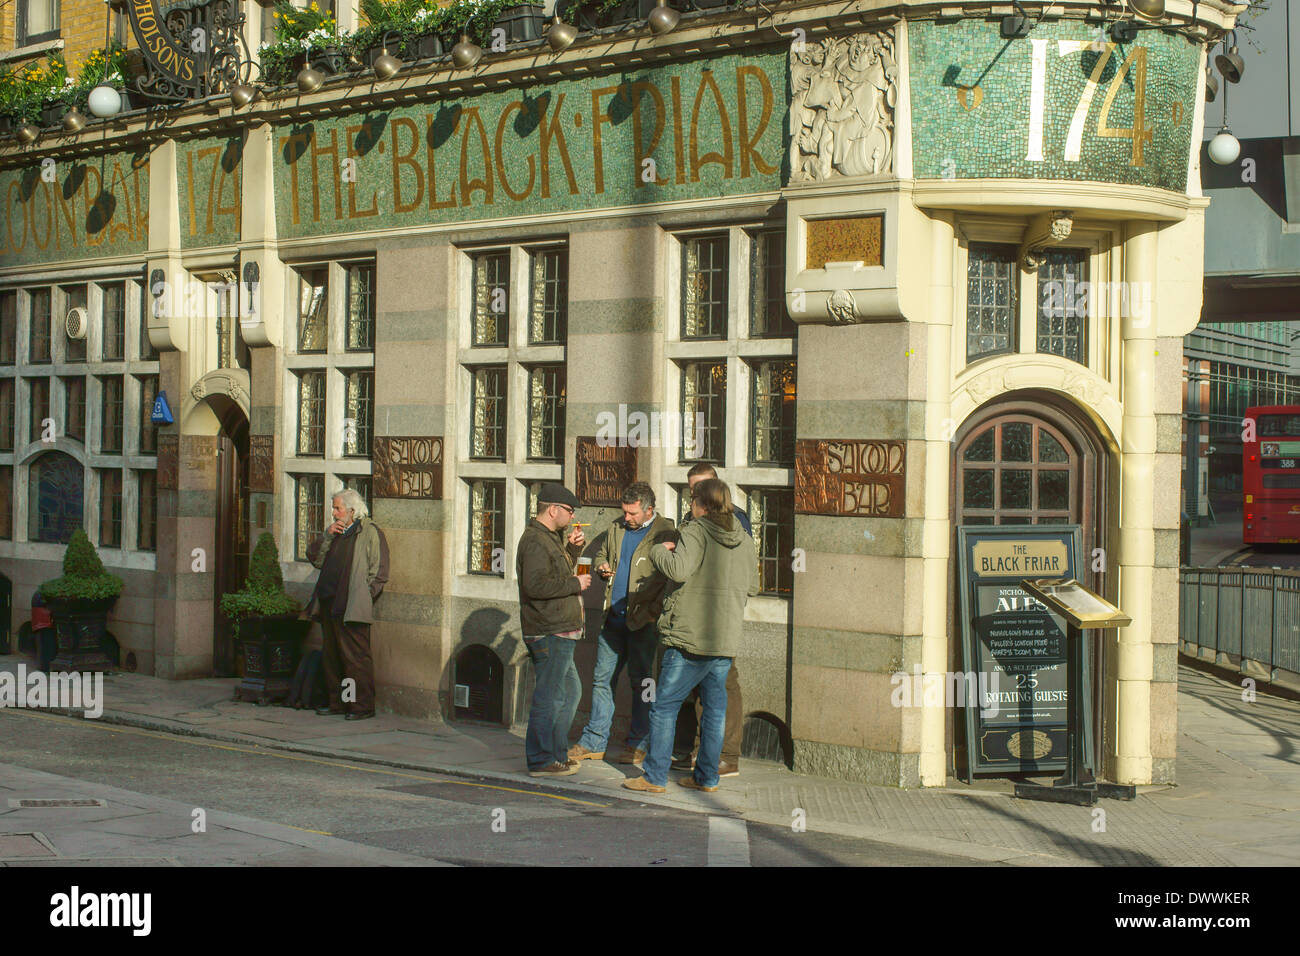 The Blackfriars pub London. People drinking outside the pub Stock Photo